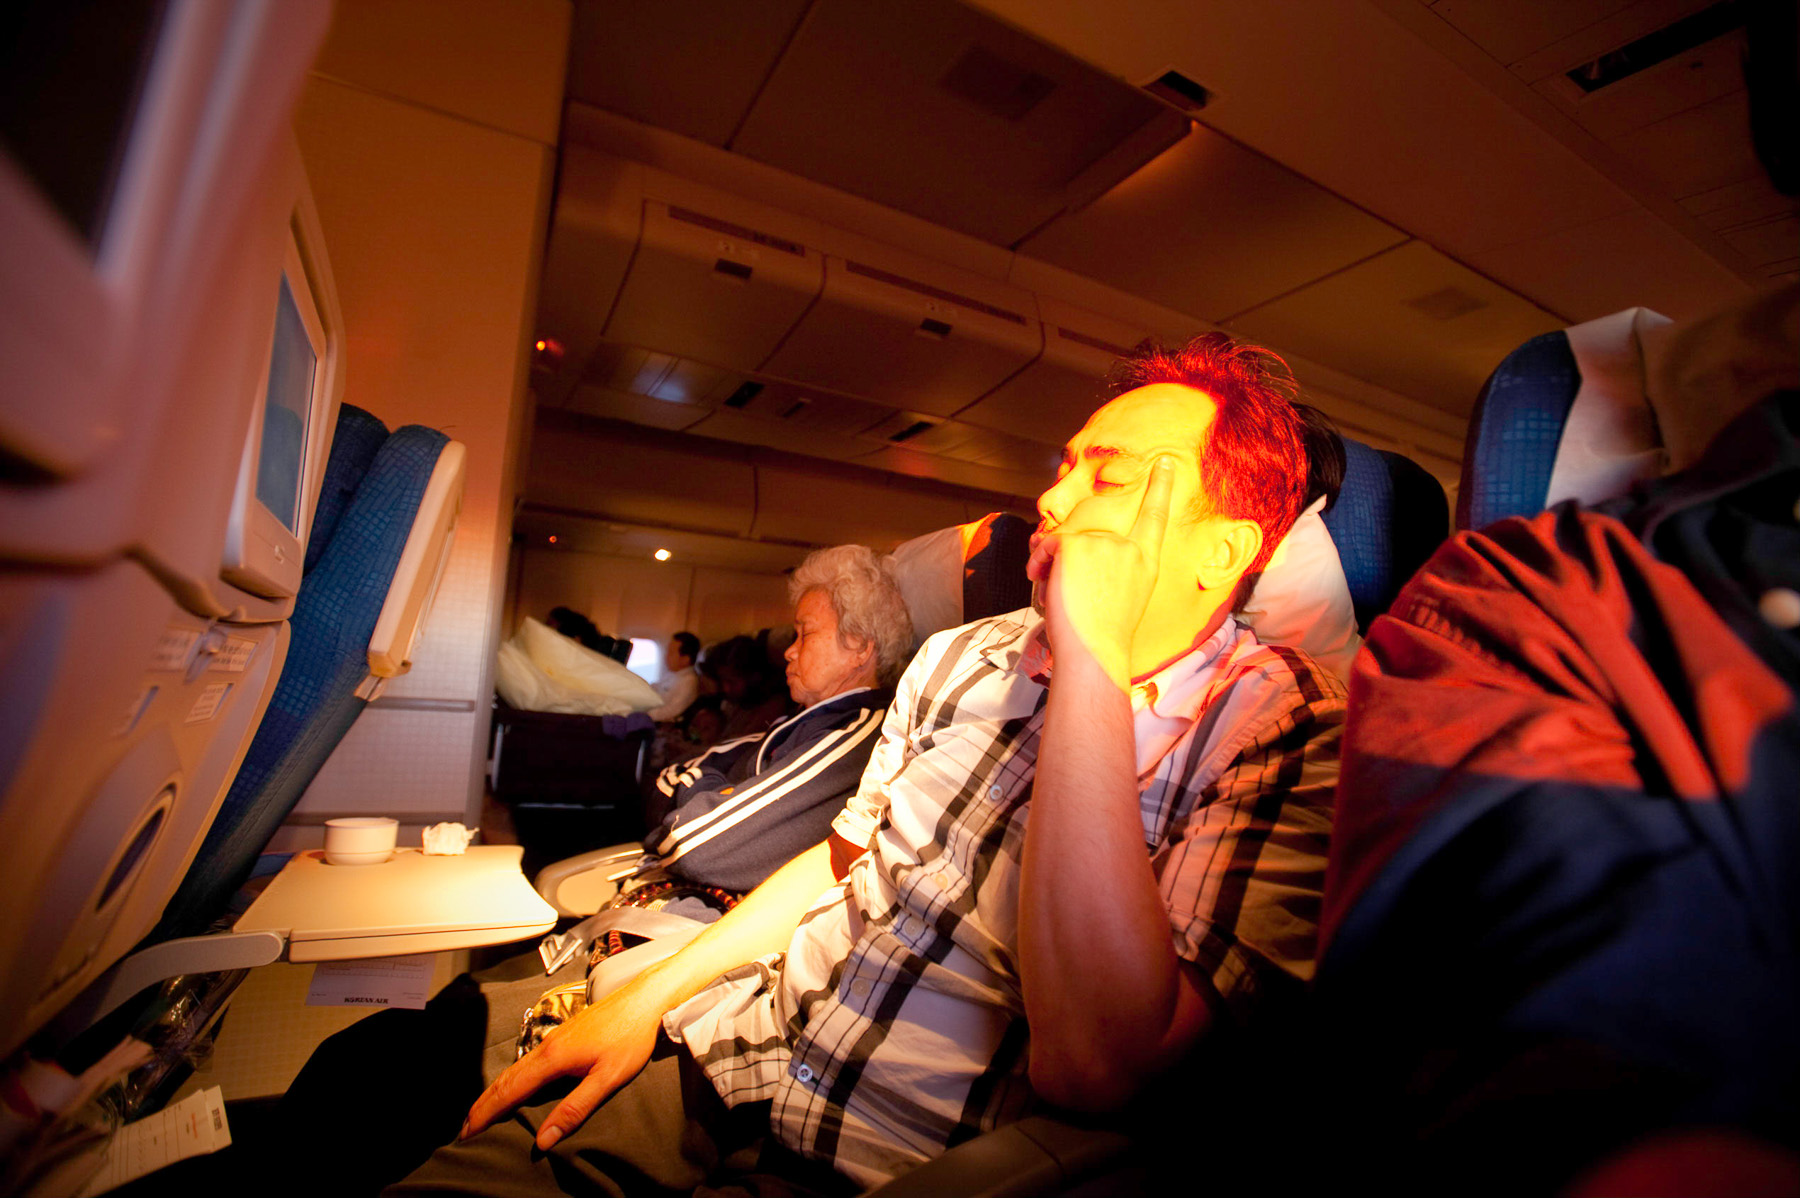 Cambodian man asleep on airplane ride to Seoul.